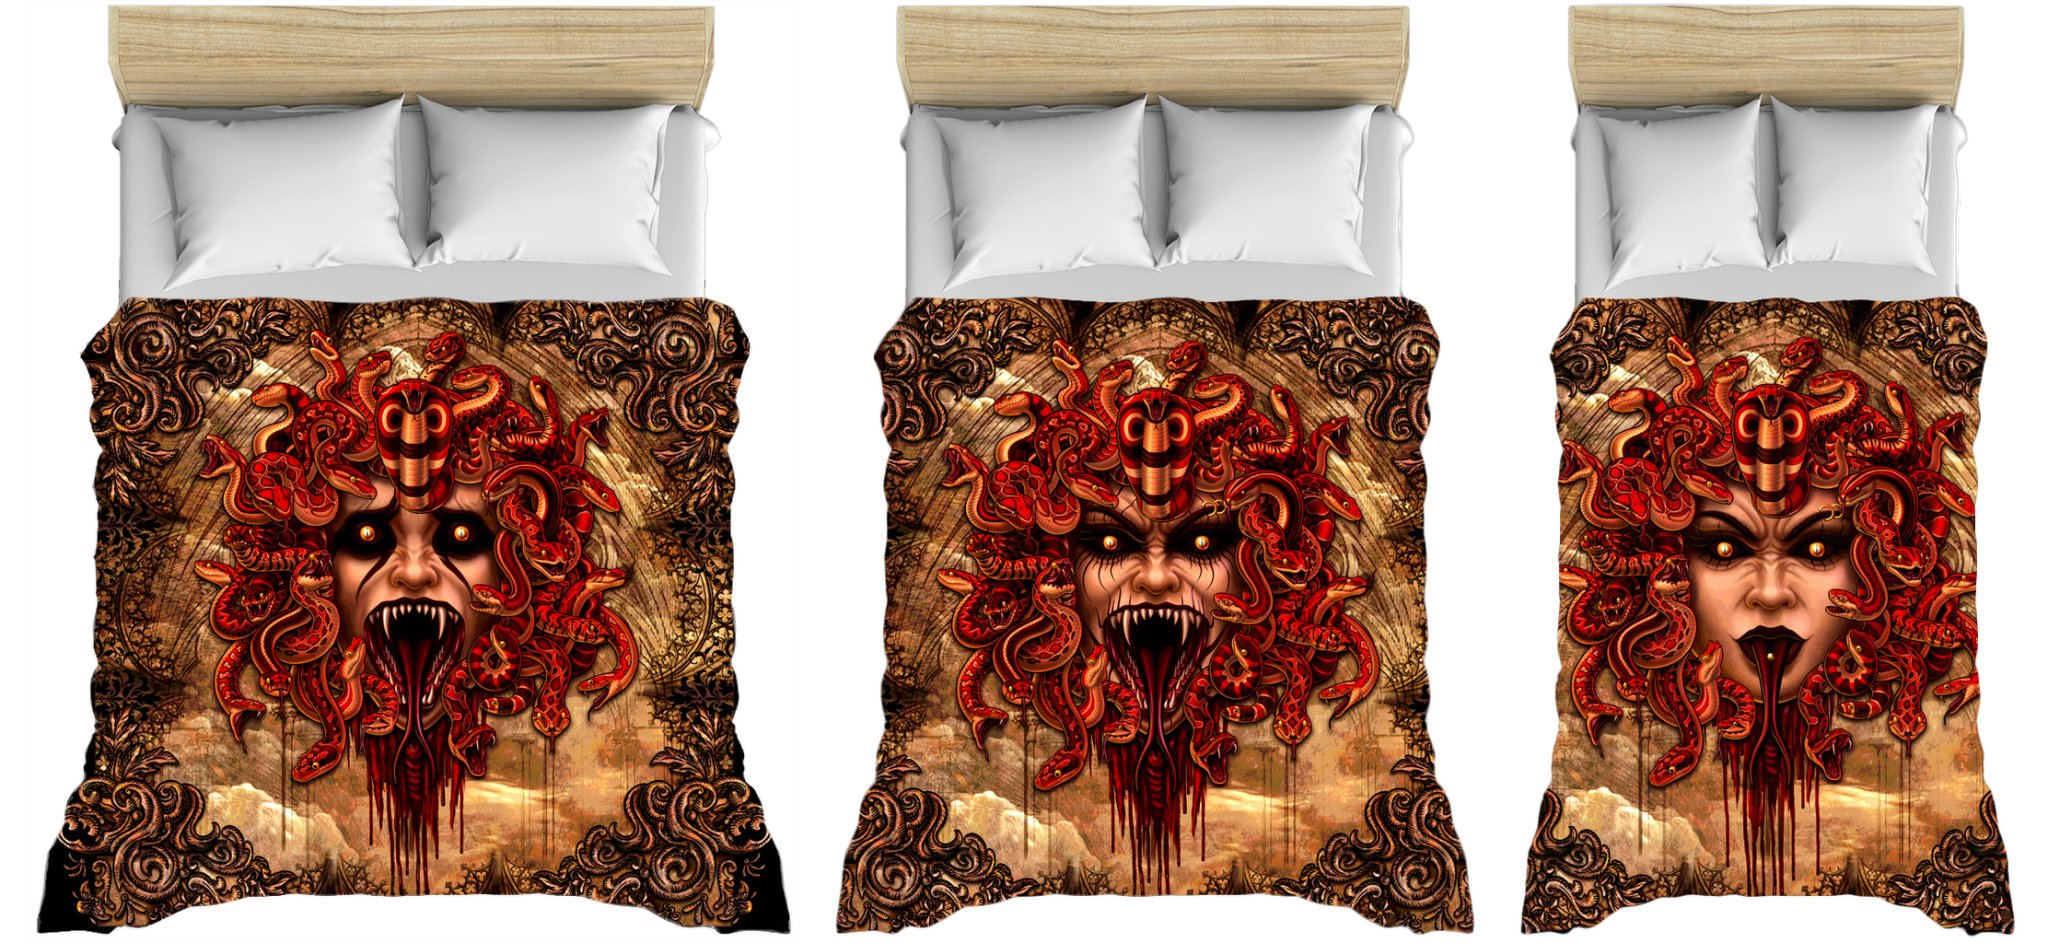 Goth Bed Cover, Duvet or Comforter, Medusa Skull, Horror Bedding Set, Bedroom Decor, King, Queen & Twin Size - Beige, 4 Faces - Abysm Internal